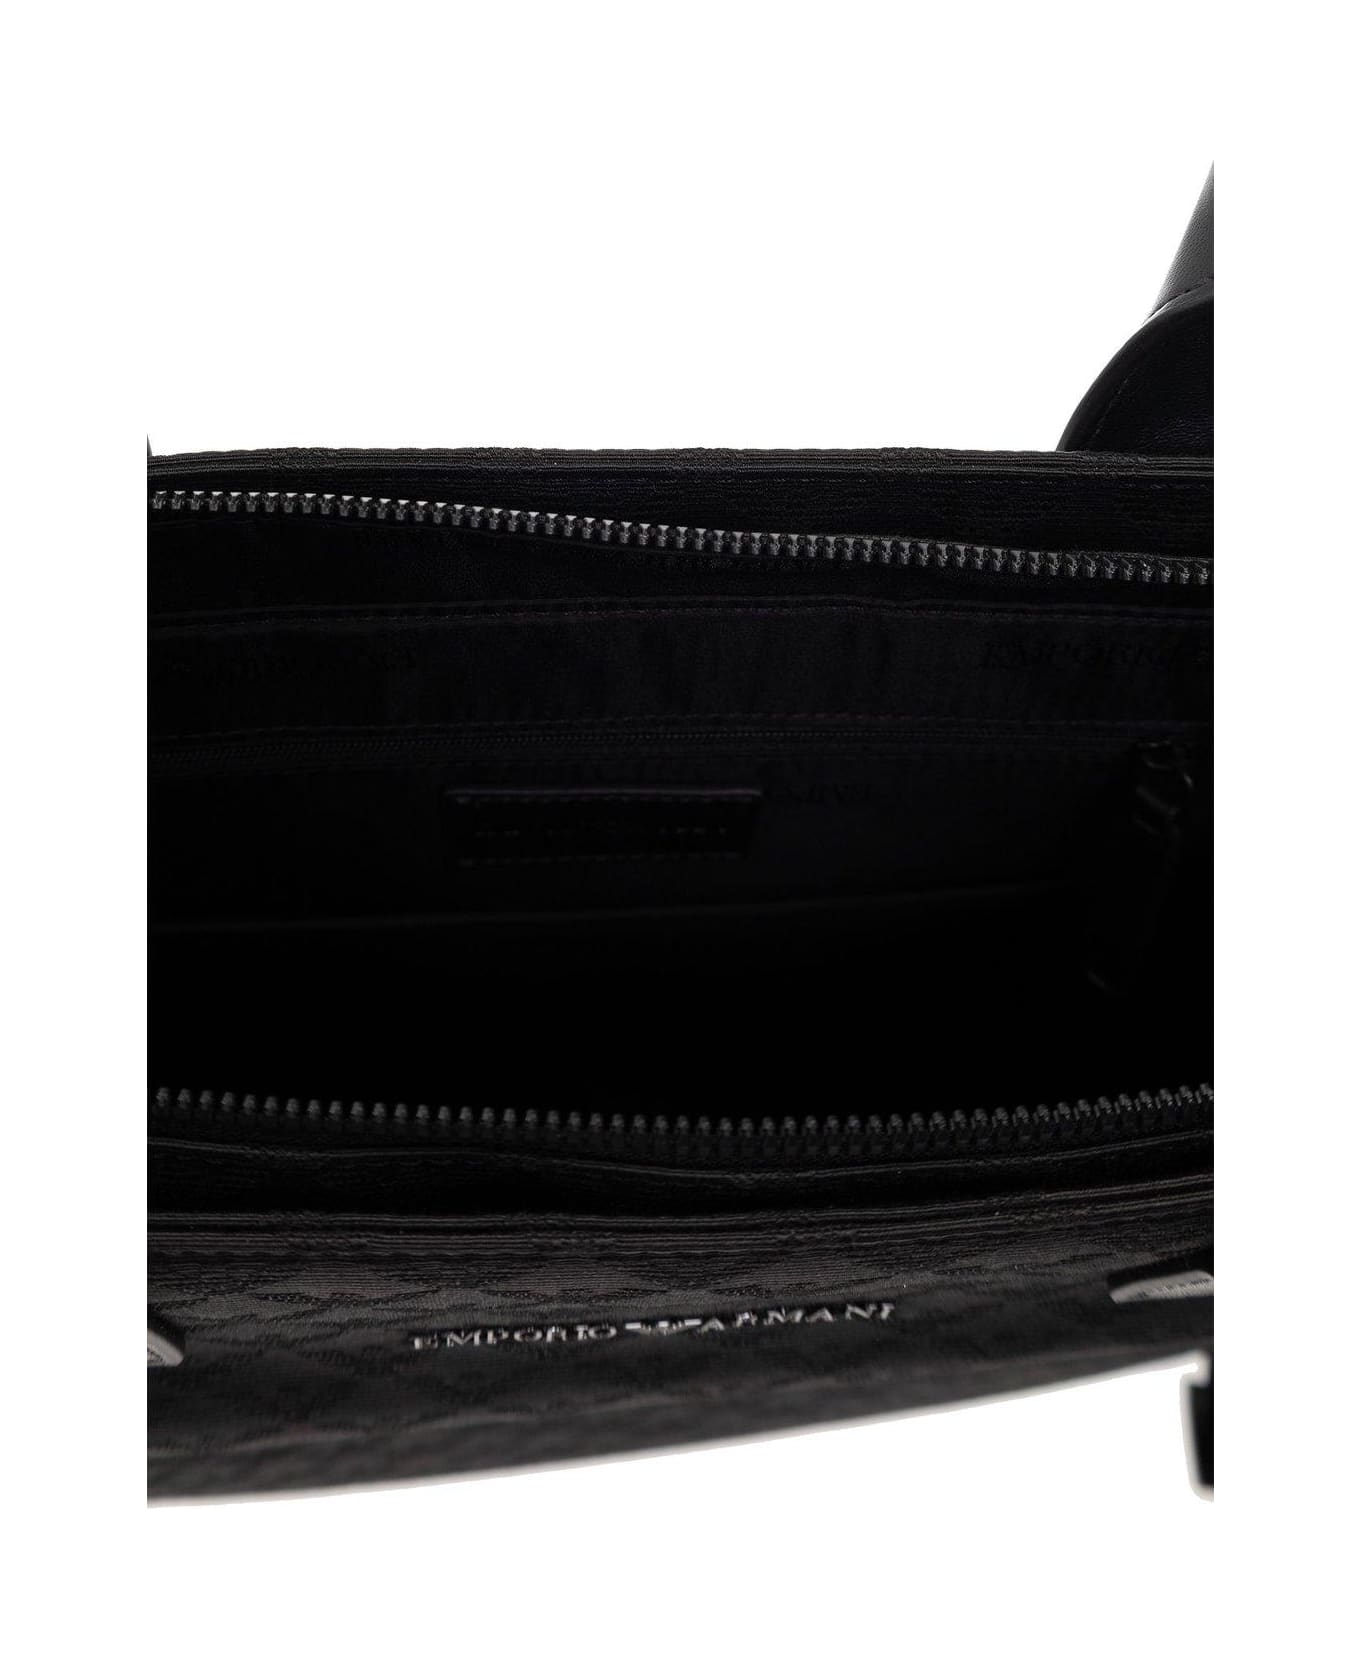 Emporio Armani Shopper Bag With Monogram - Black/Black/Black トートバッグ